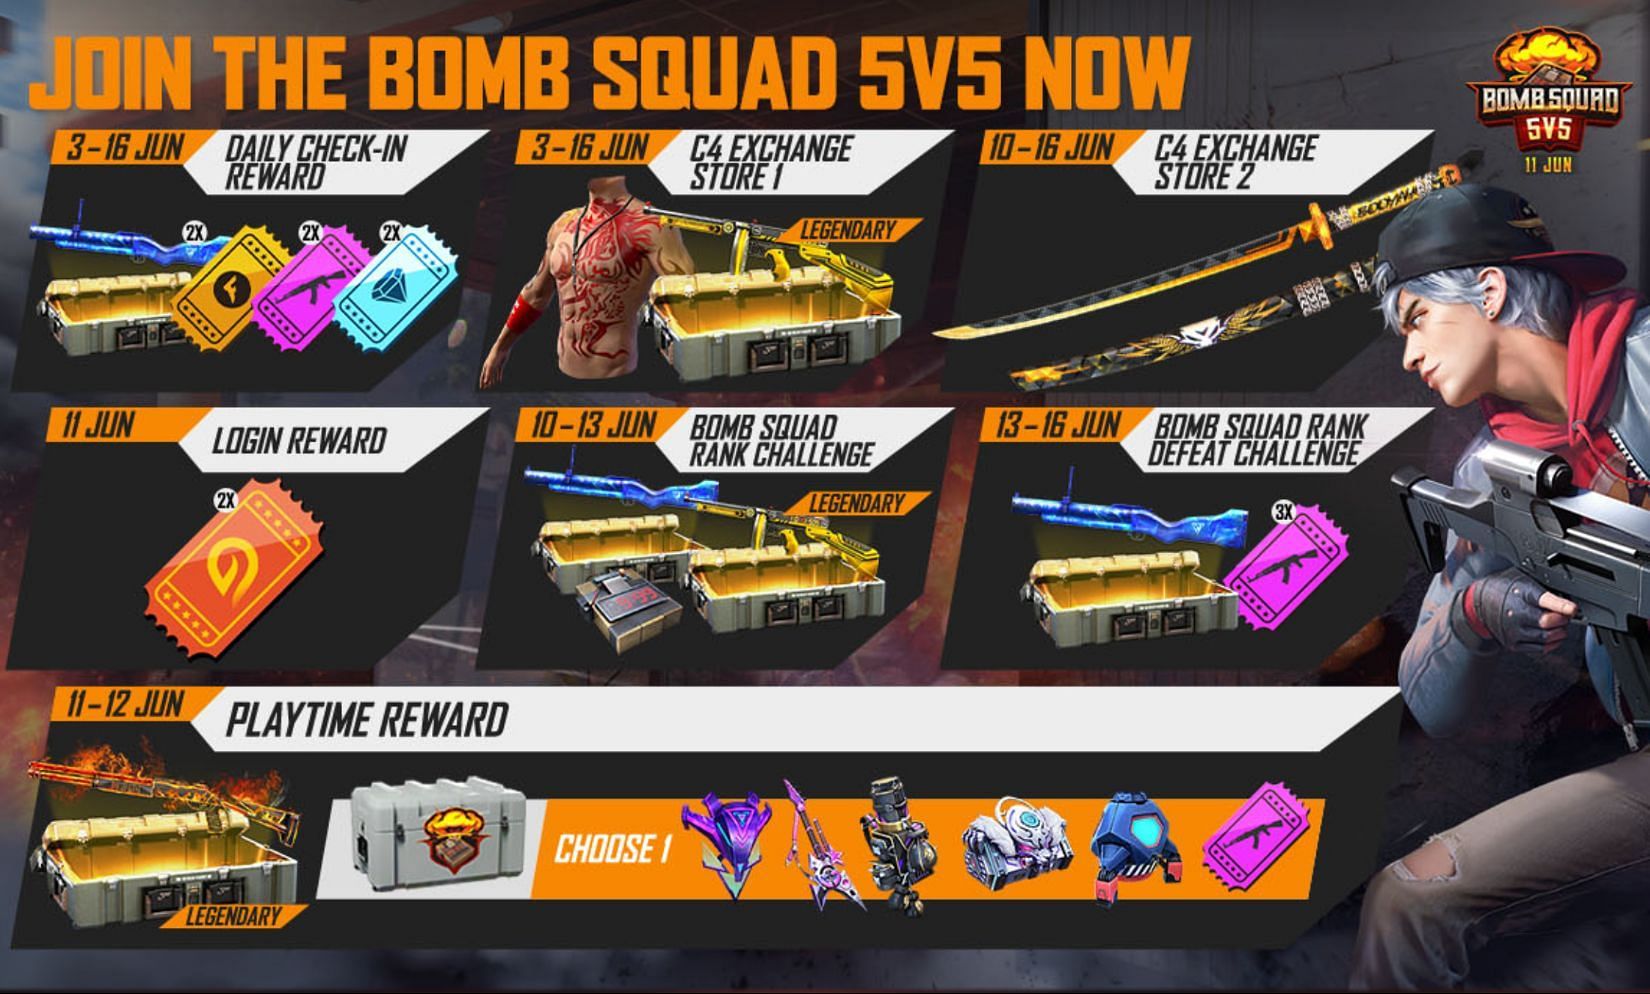 Bomb Squad Rank Challenge will start on 10 June (Image via Garena)